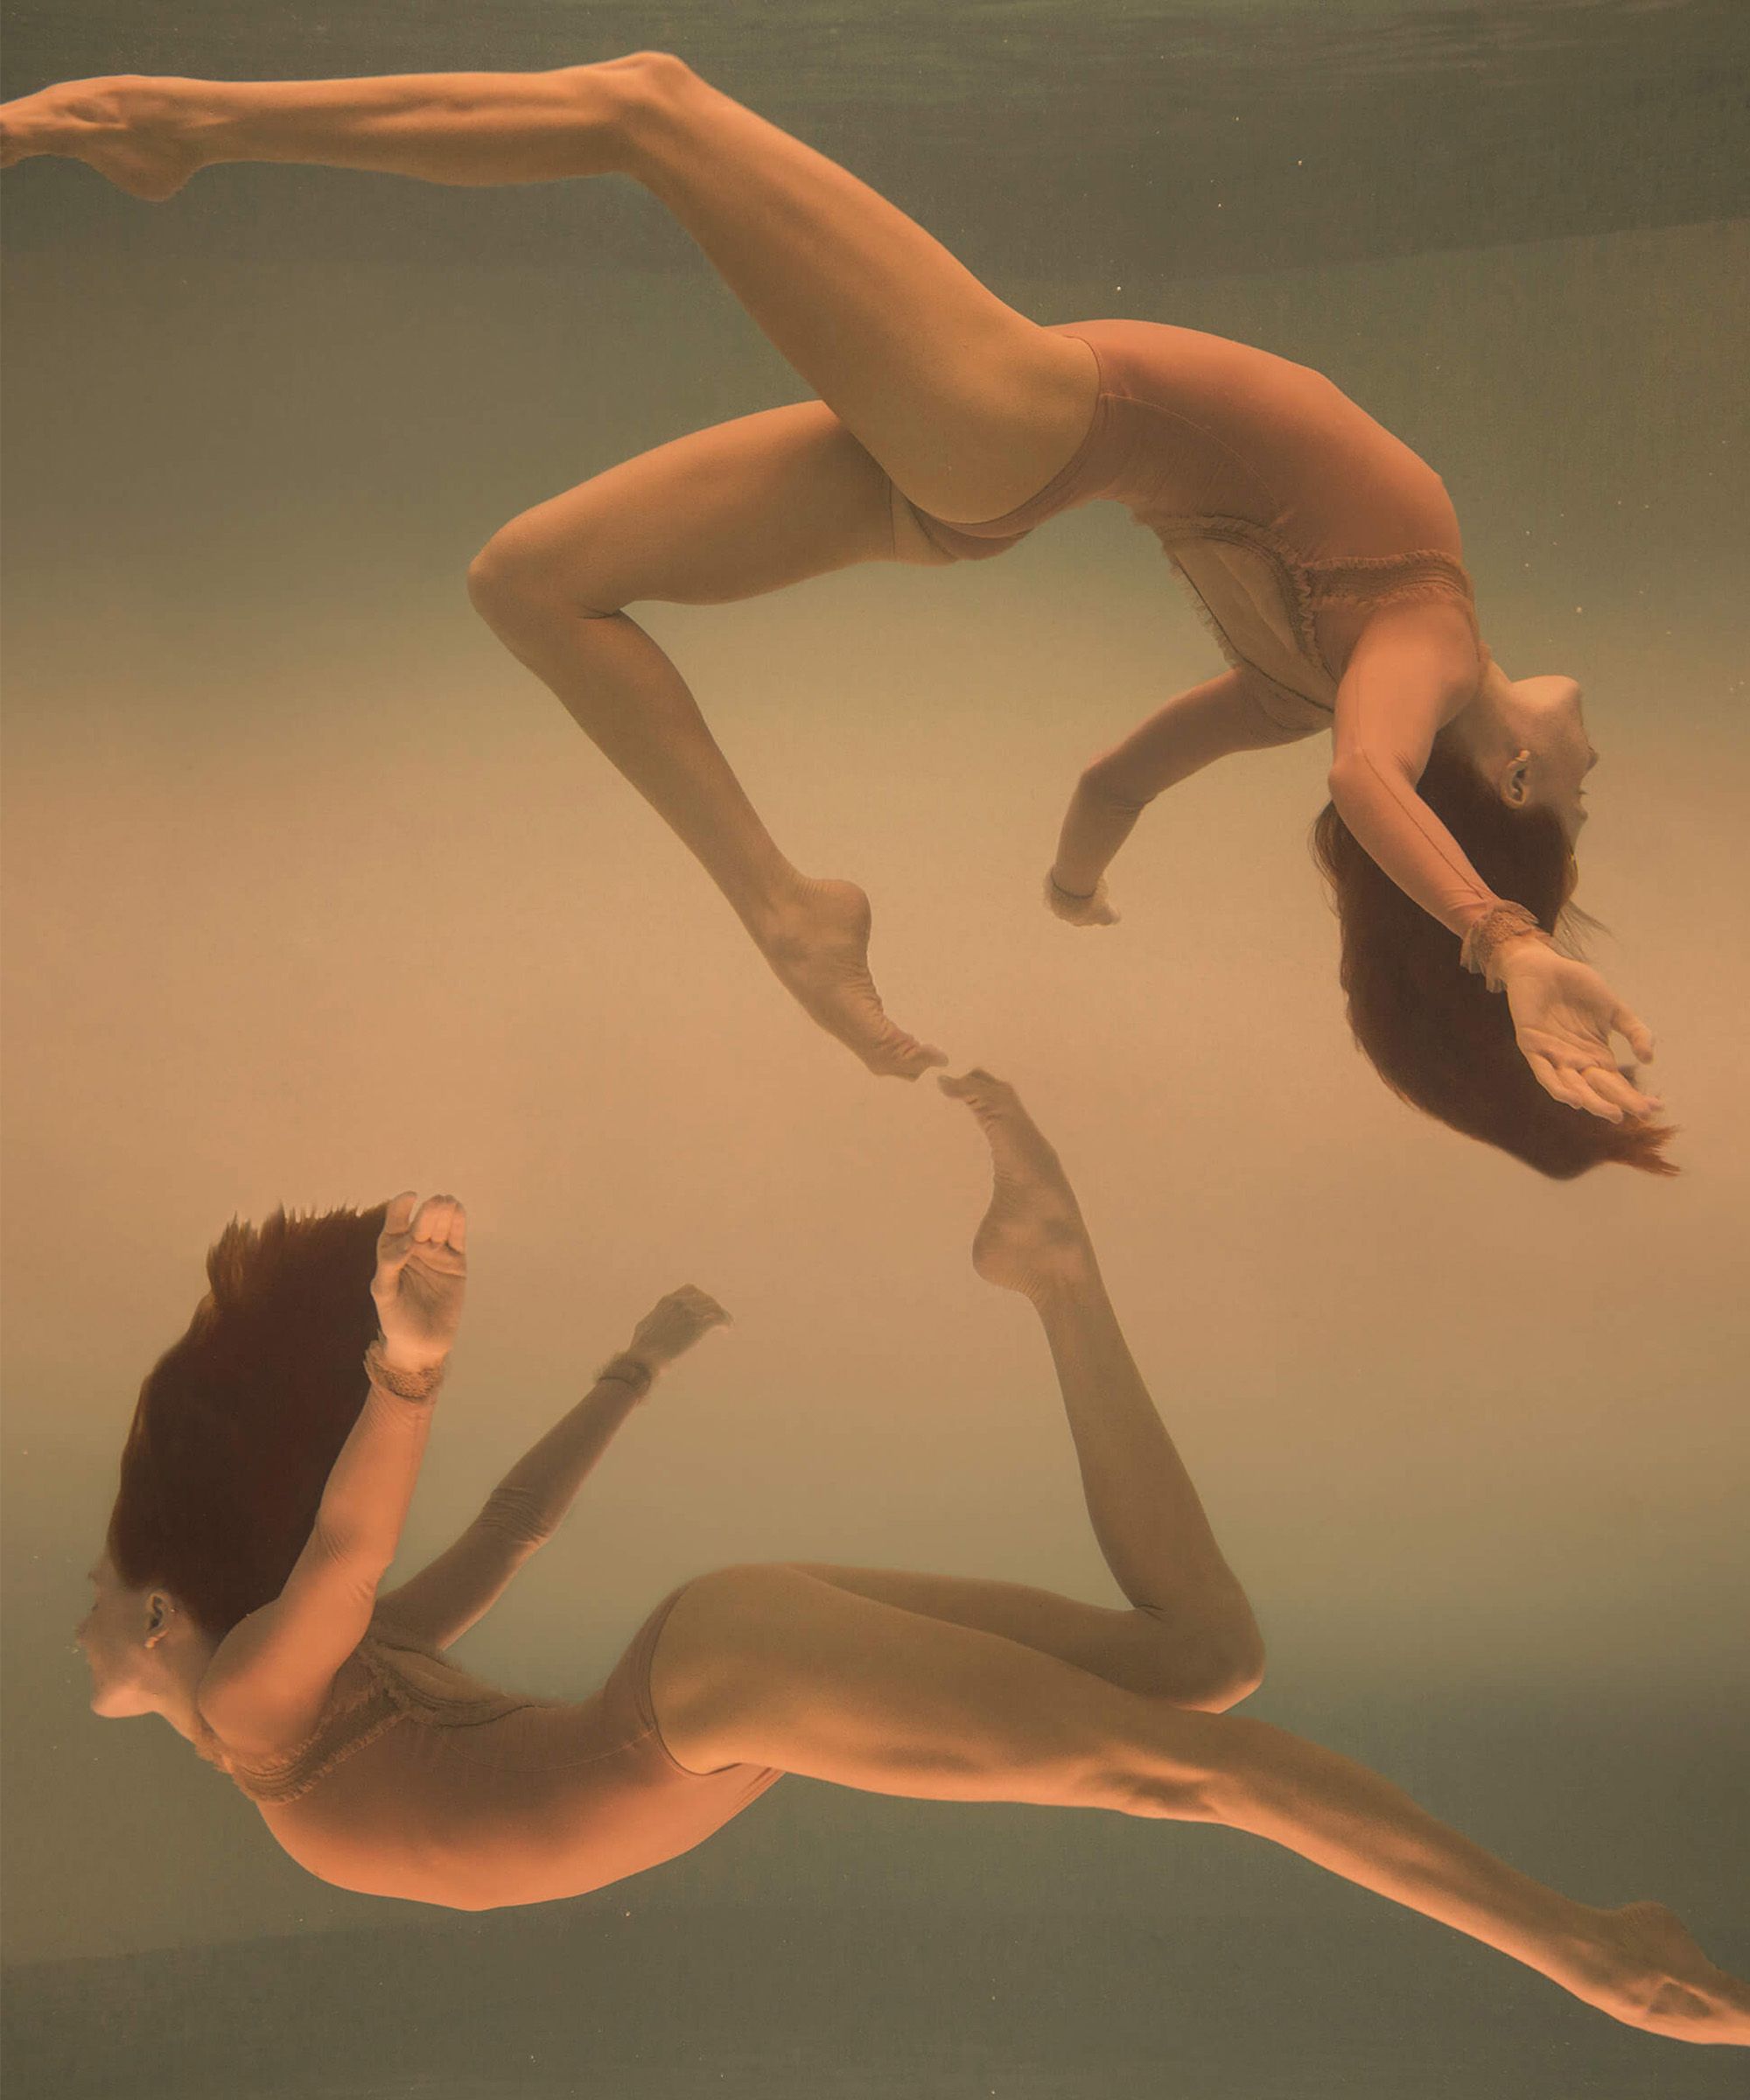 Finding Creative Expression Underwater